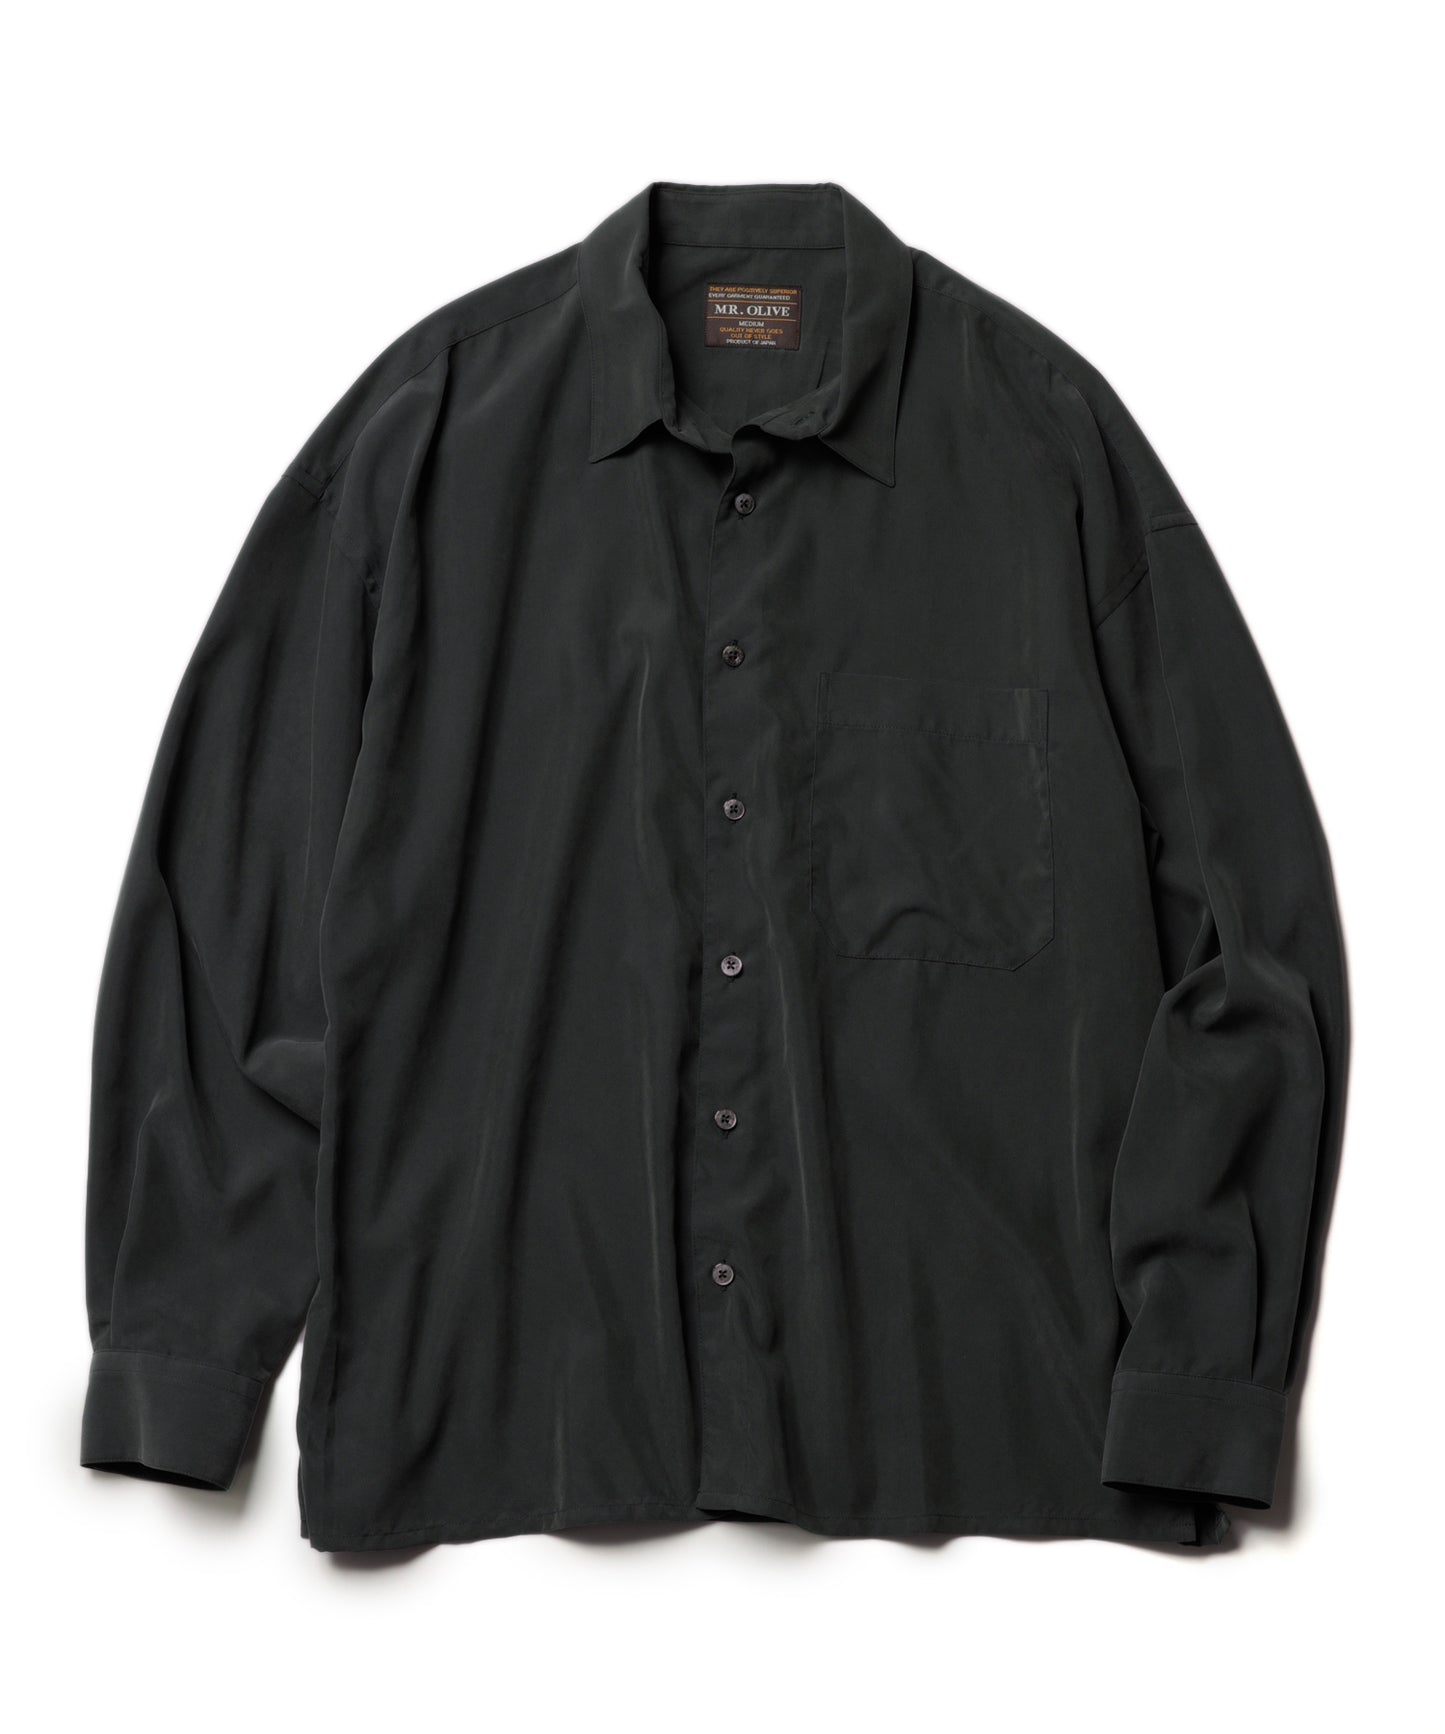 MR.OLIVE / T/R POWDER CLOTH / SQUARE CUT REGULAR COLLAR SHIRT